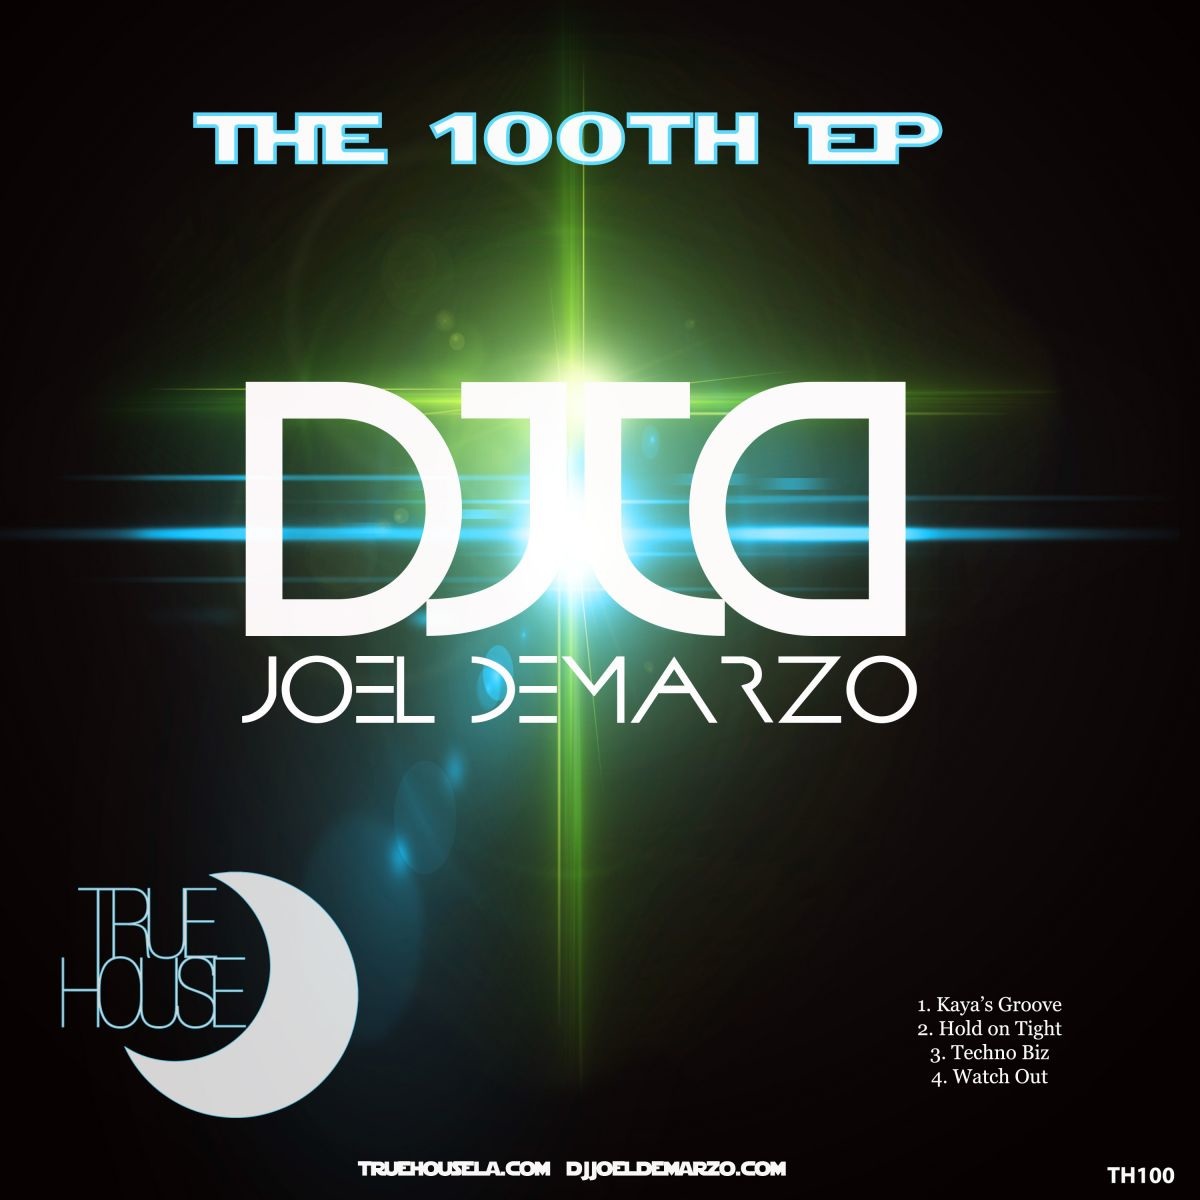 Joel DeMarzo - The 100th EP / True House LA